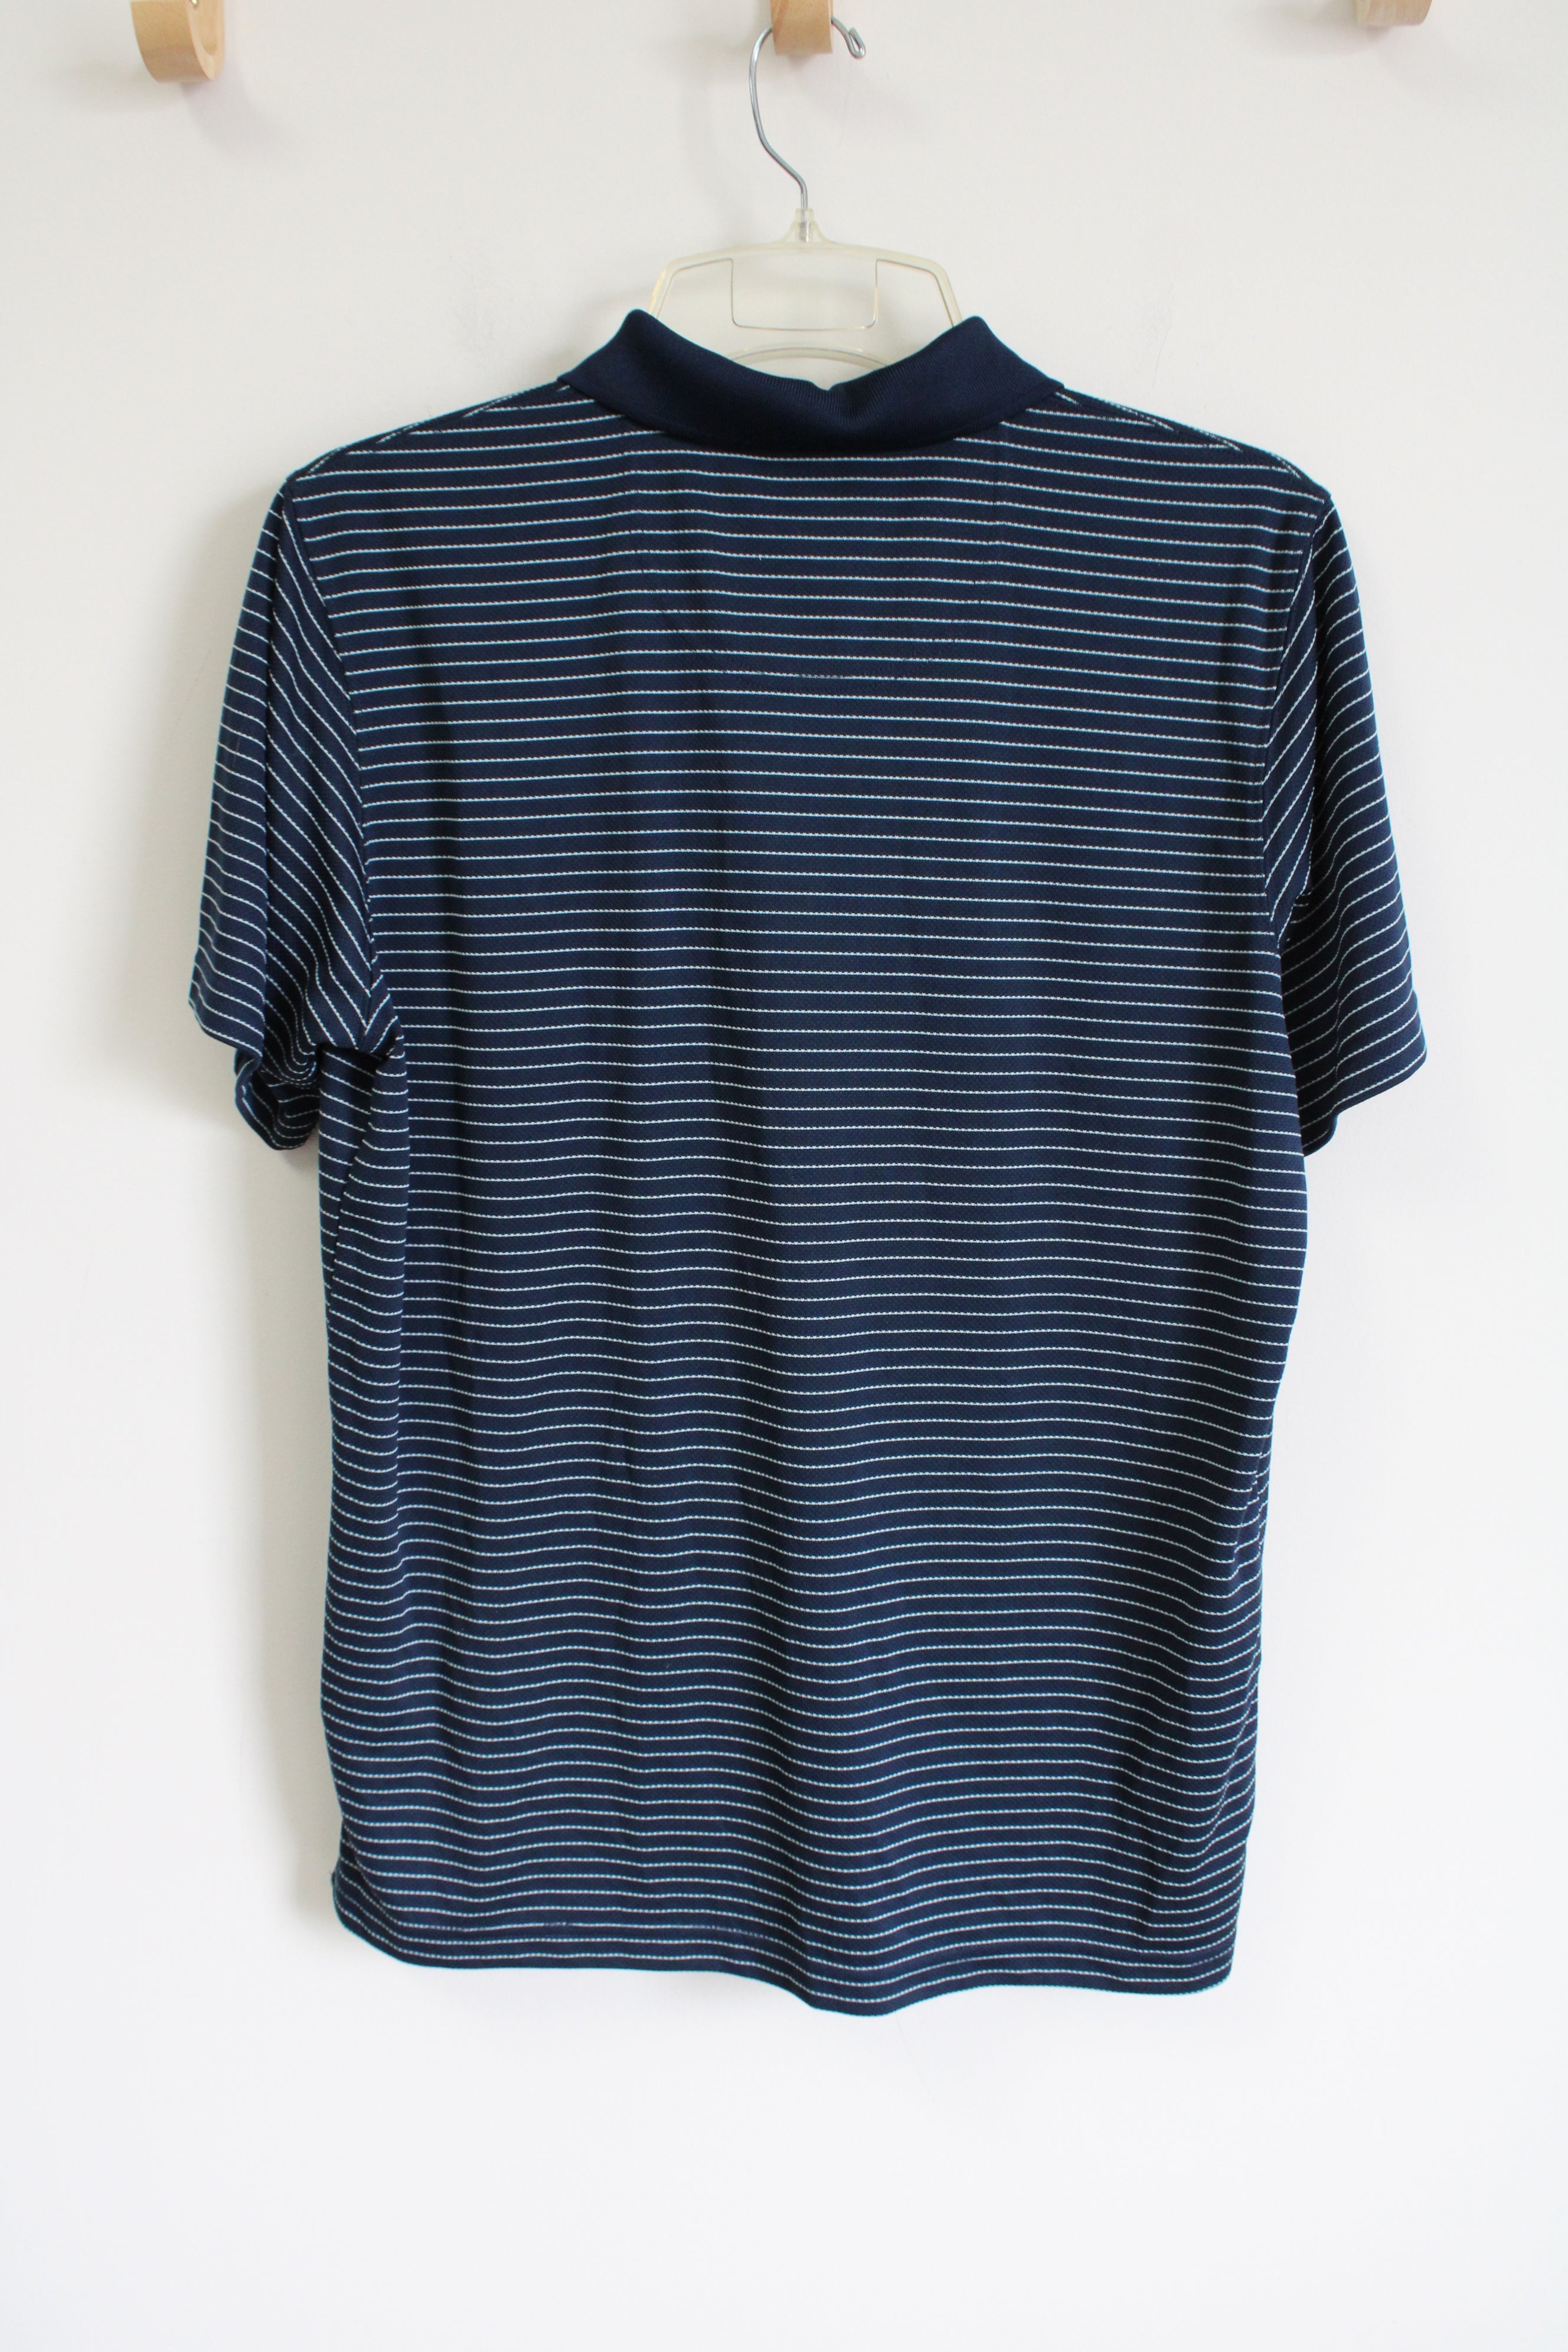 Columbia Omni-Shade Navy Blue Striped Polo Shirt | M